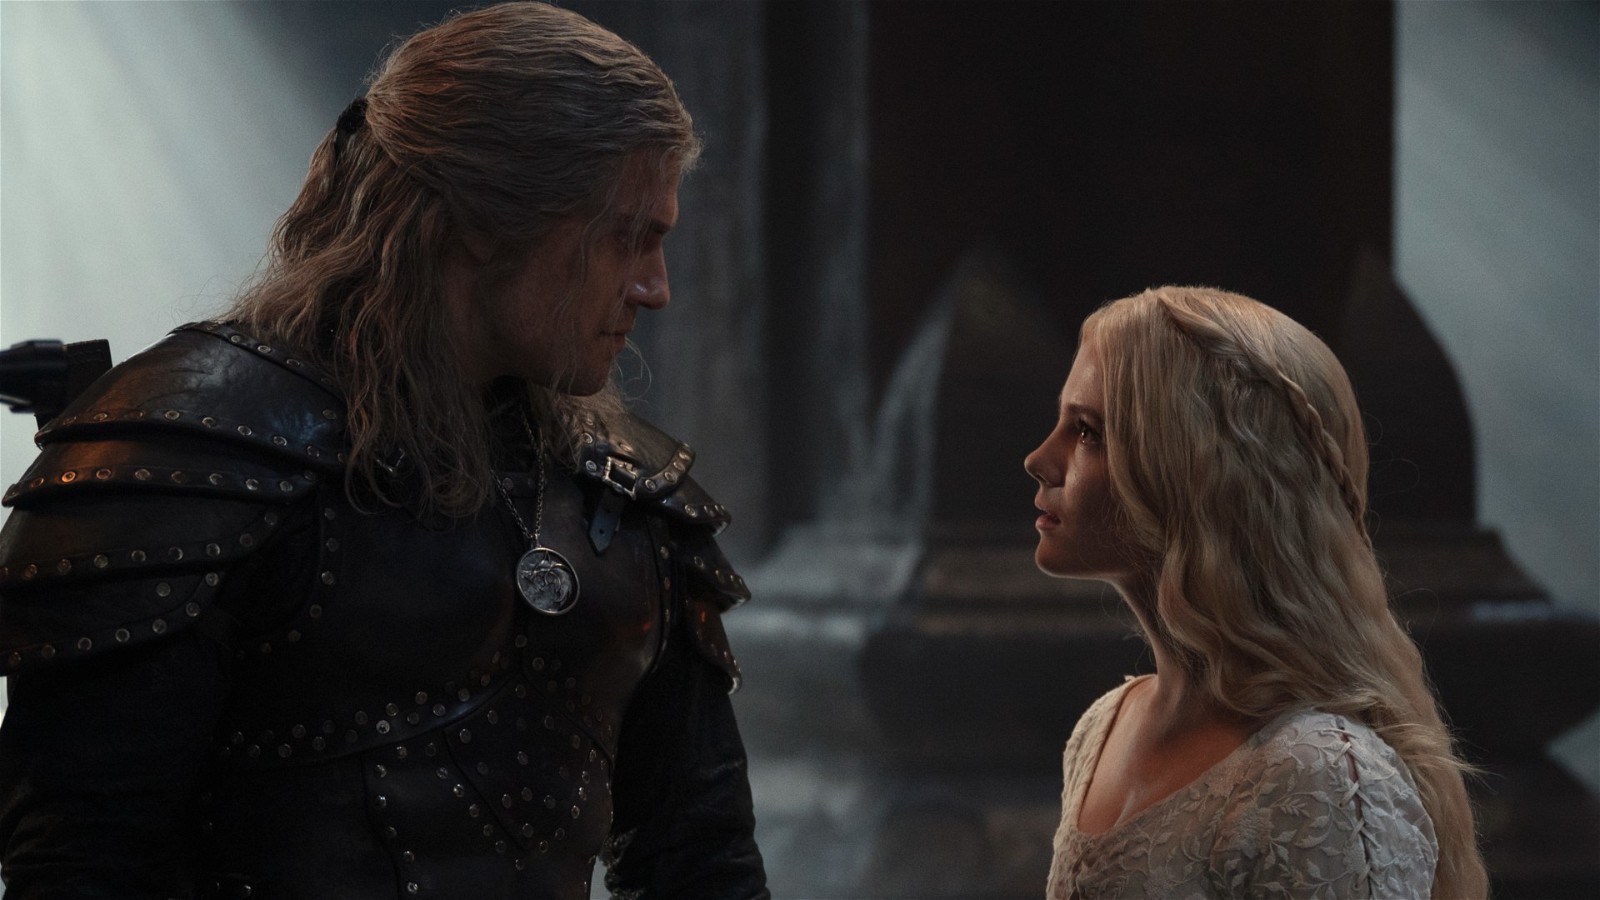 Henry Cavill and Freya Allan as Geralt and Cirilla